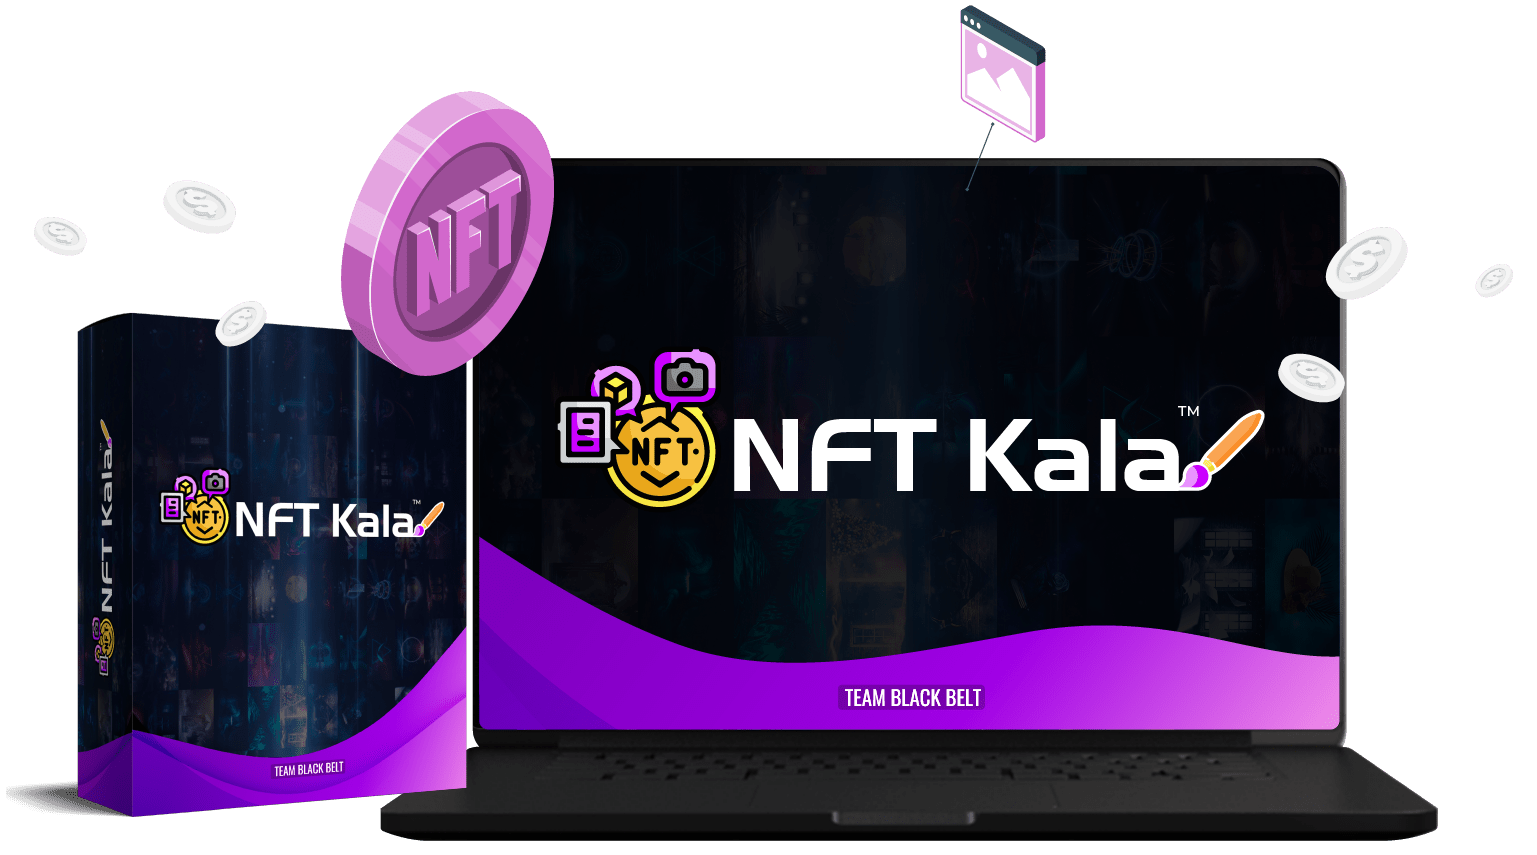 Art Flair - NFT Kala + OTOs Free Download